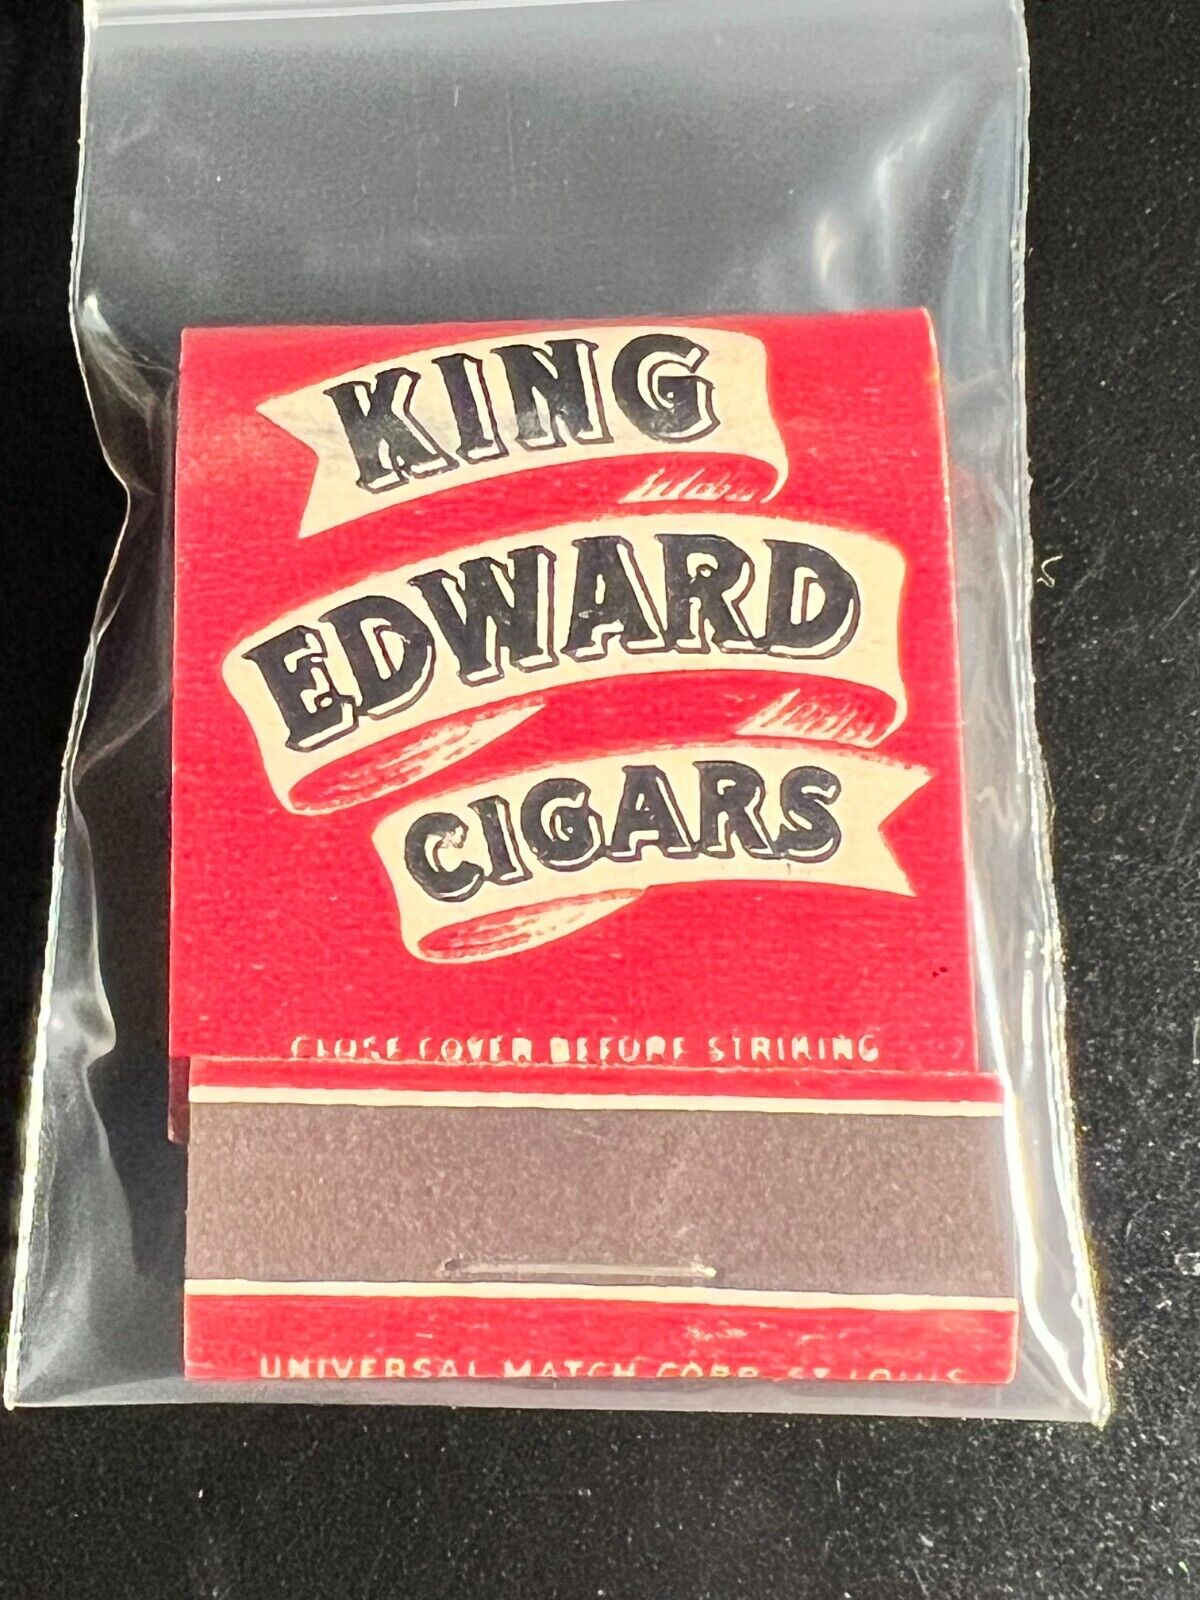 MATCHBOOK - KING EDWARDS CIGARS - MADE IN FLORIDA - UNSTRUCK